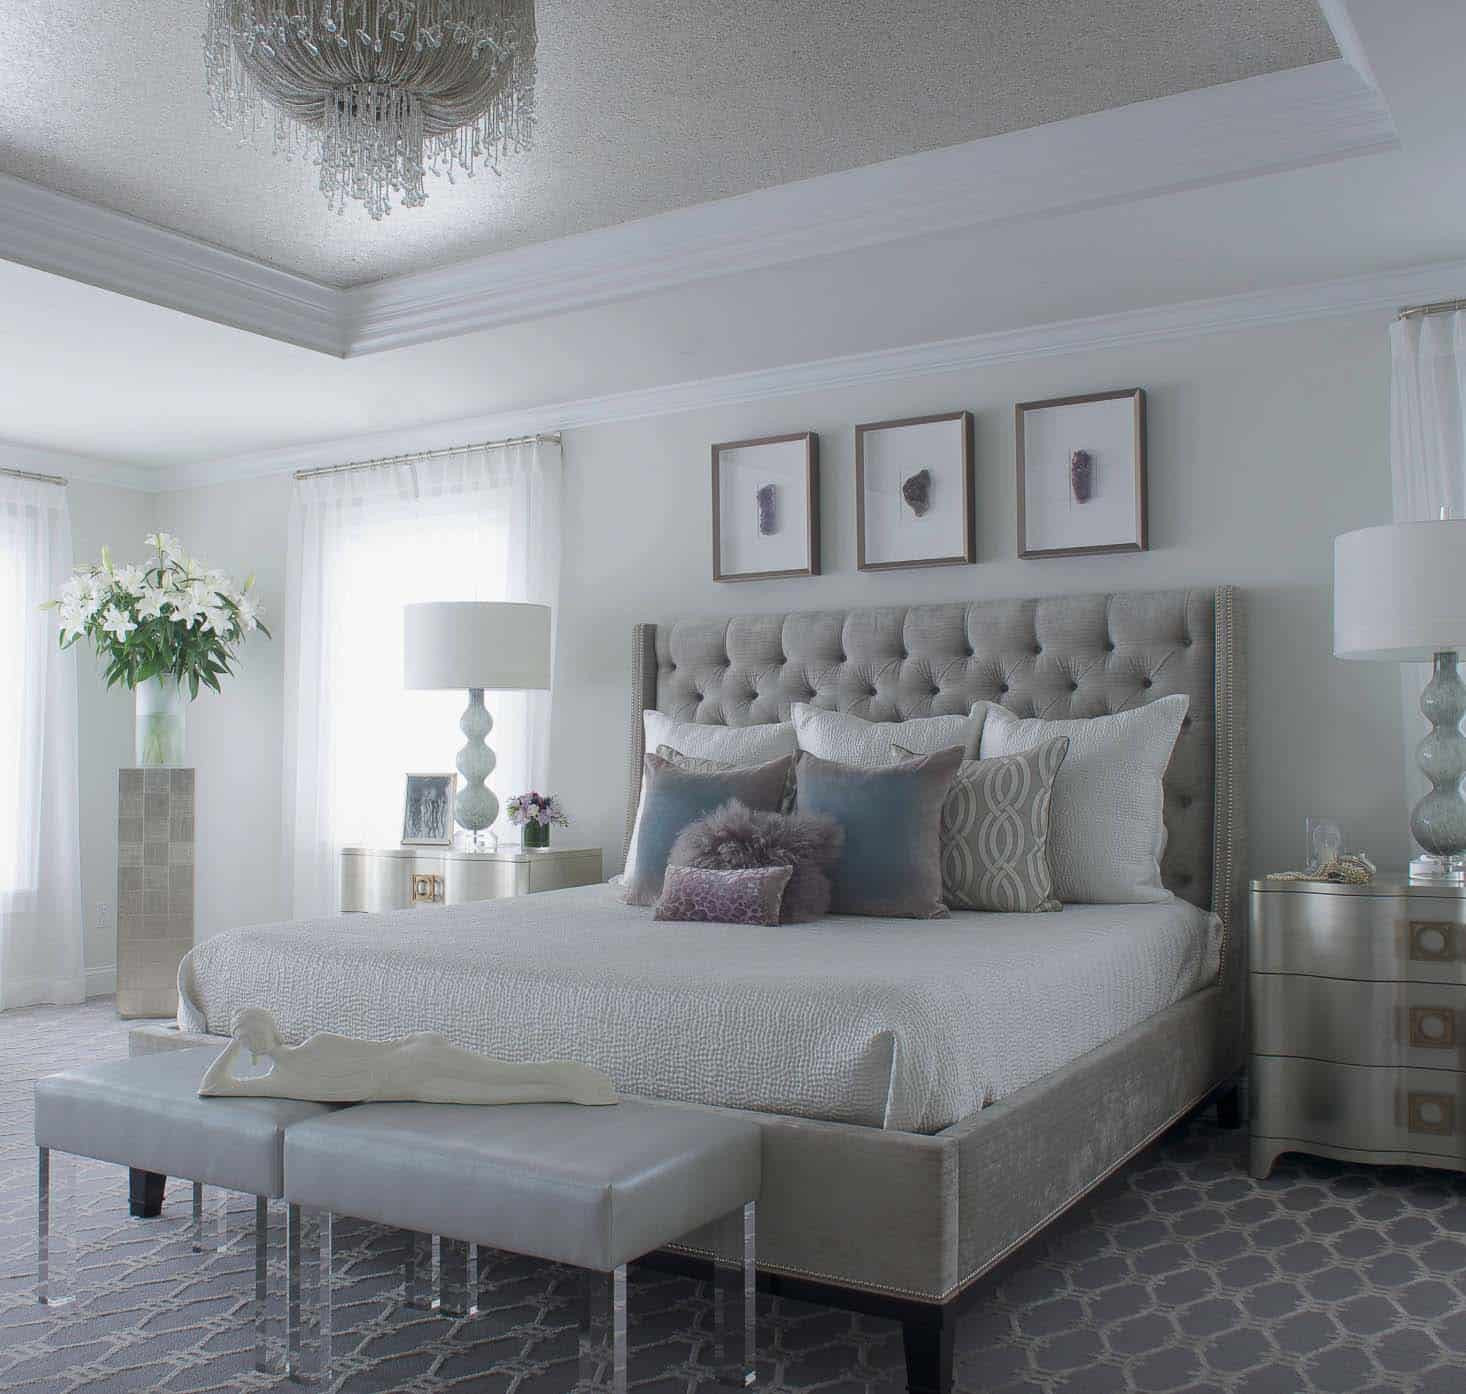 Master Bedroom Bedding
 20 Serene And Elegant Master Bedroom Decorating Ideas